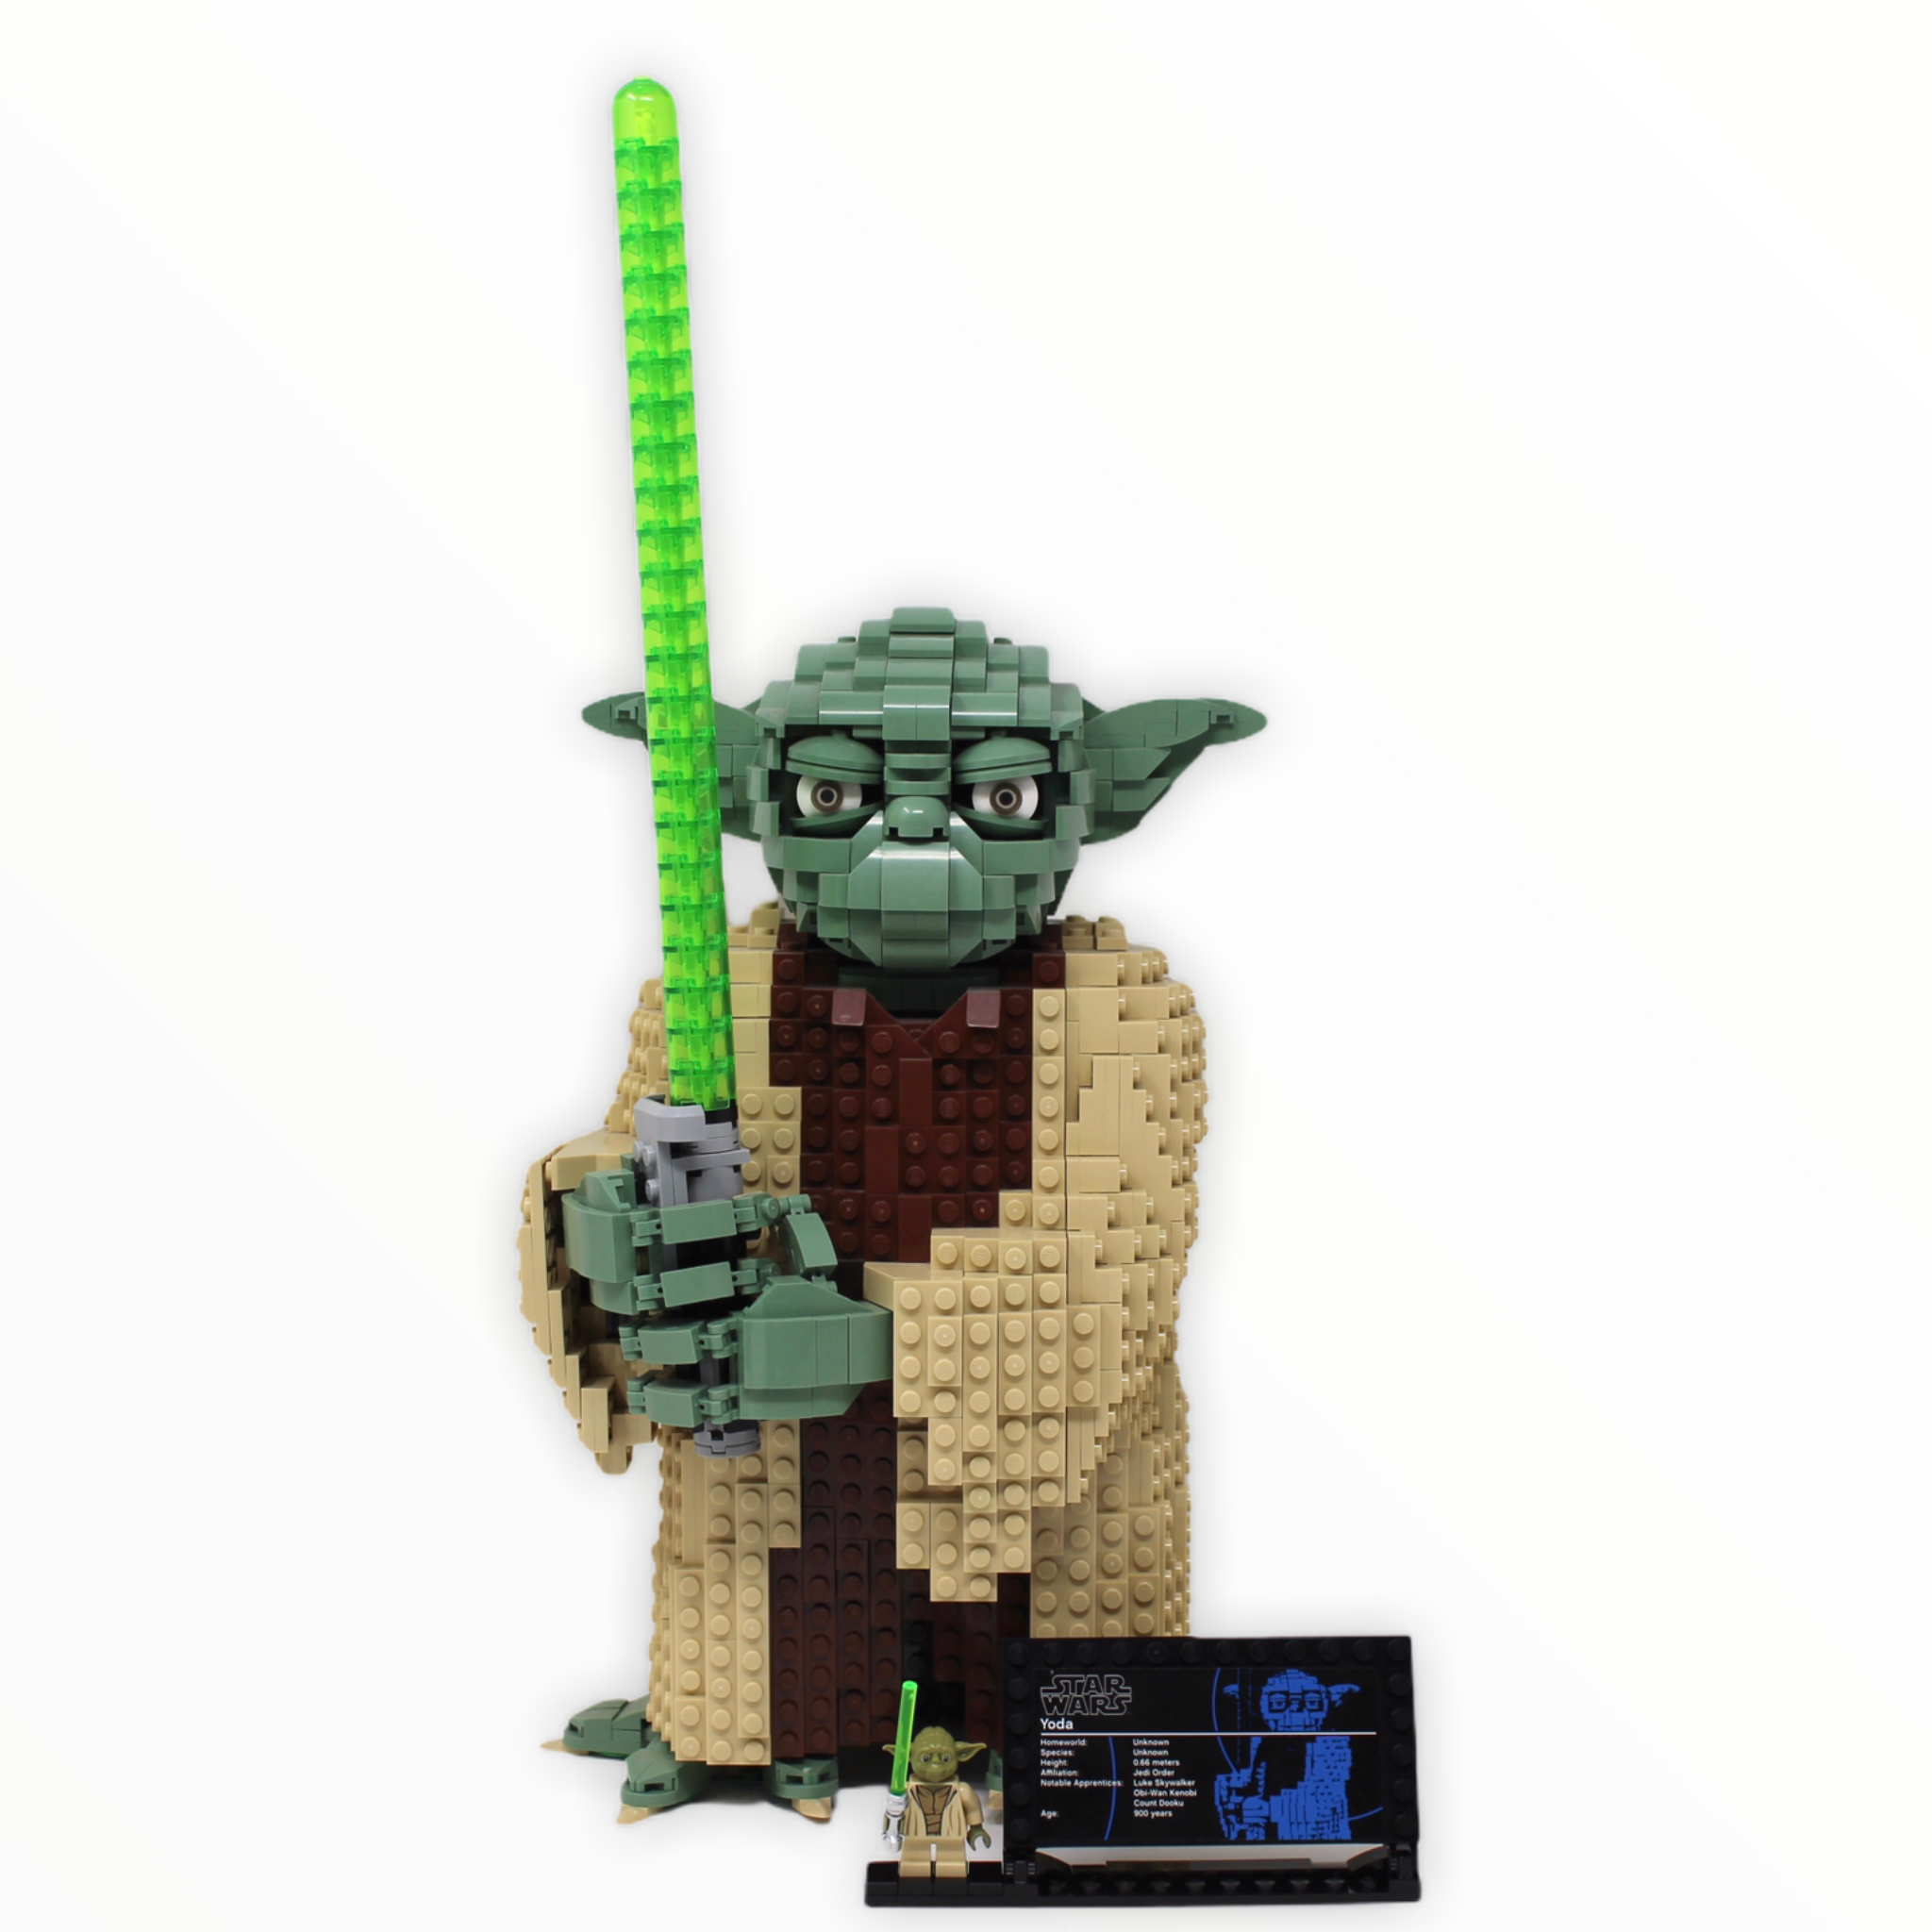 Used Set 75255 Star Wars Yoda (2019)